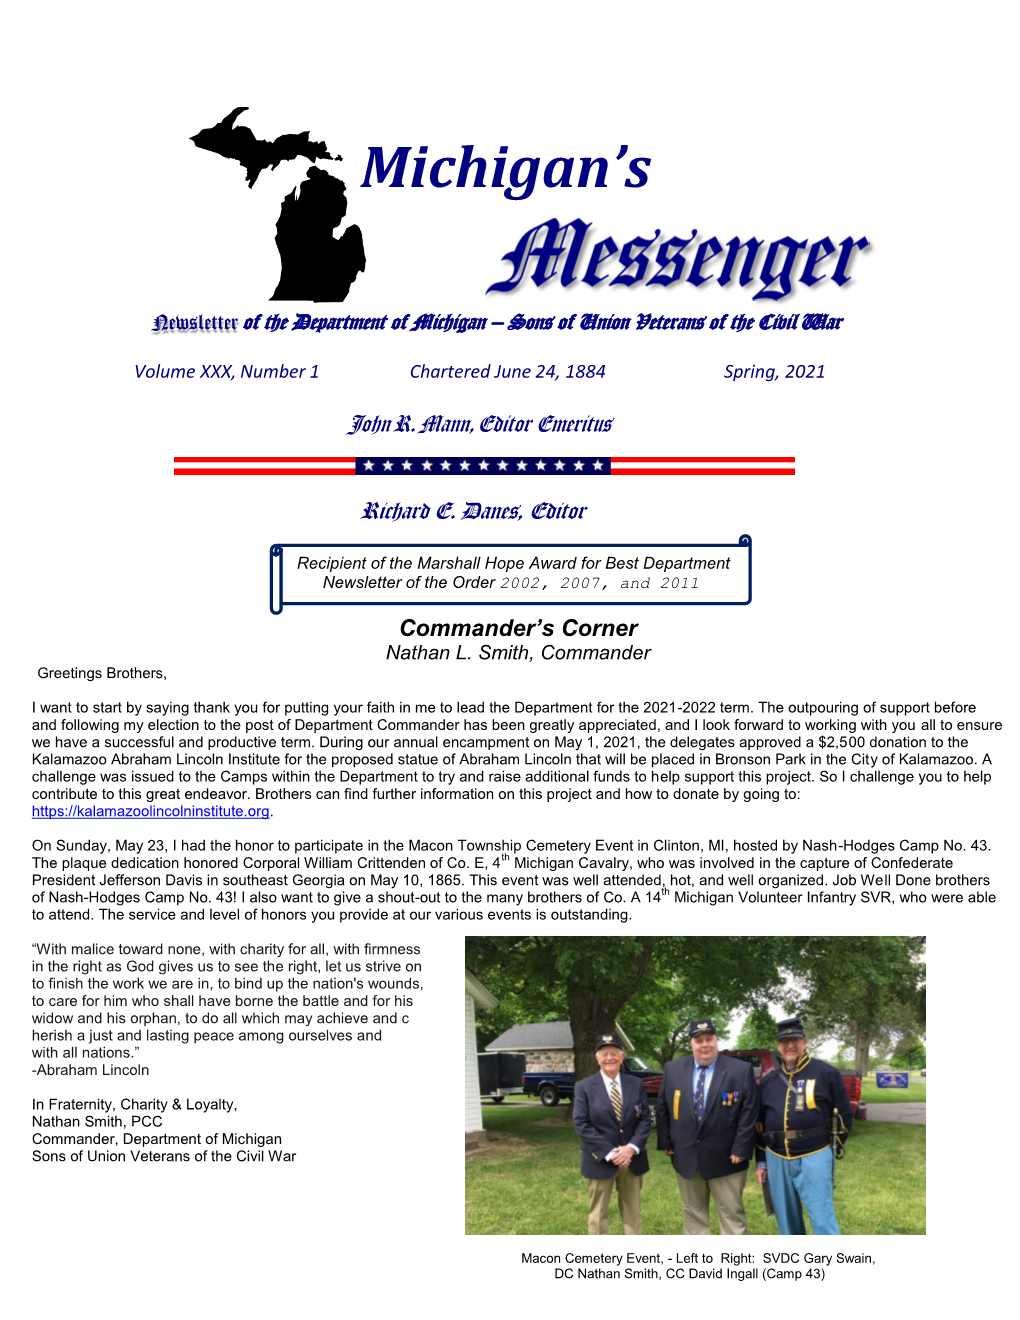 Michigan's Messenger Volume XXX, Number I SPRING, 2021